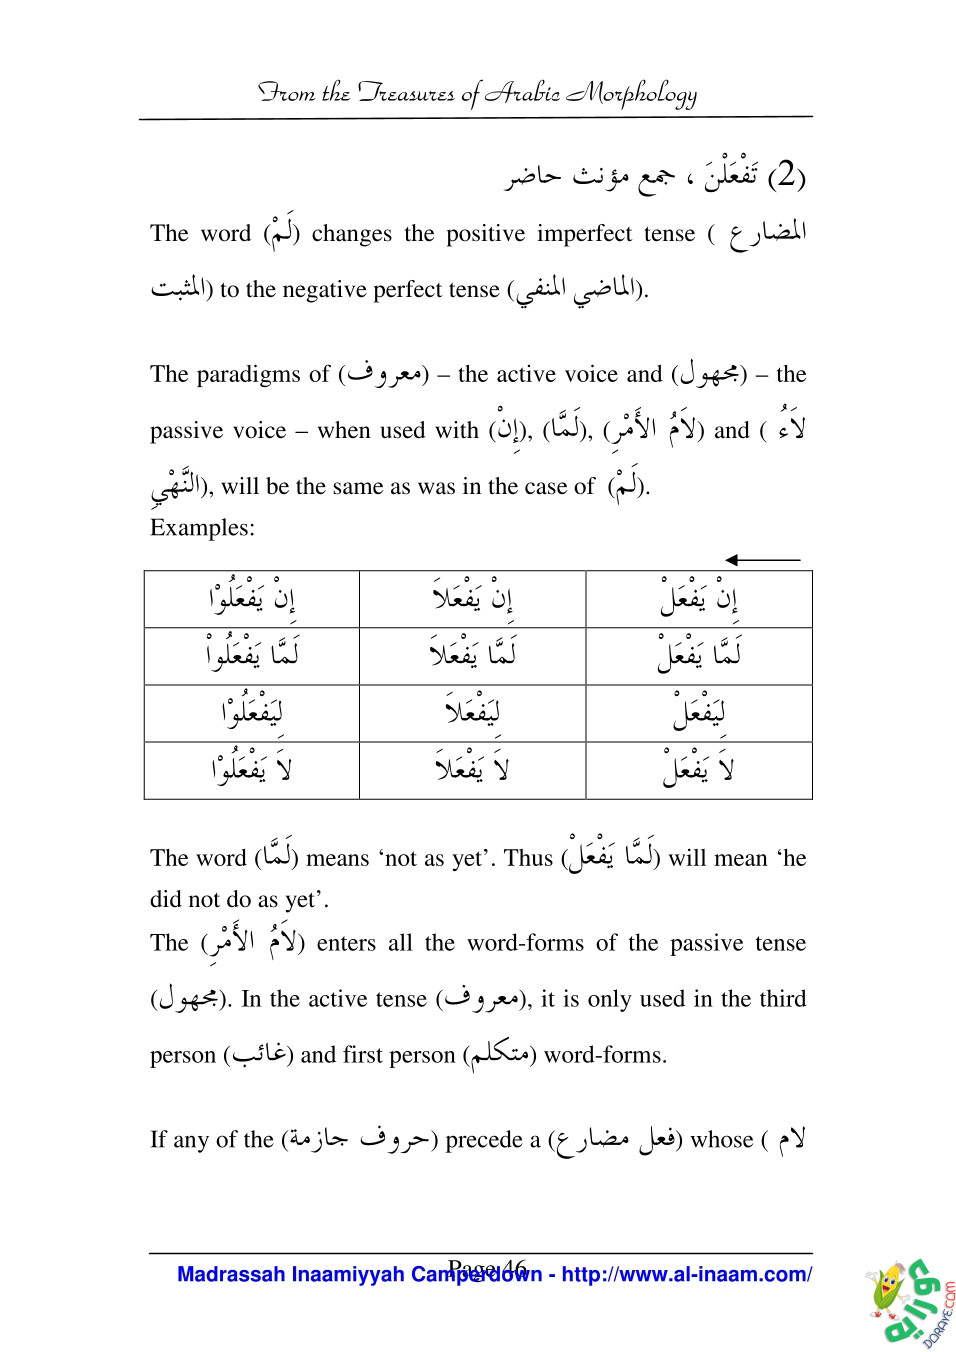 Treasures of Arabic Morphology 046 - كنوز الصرف العربي Treasures of Arabic Morphology